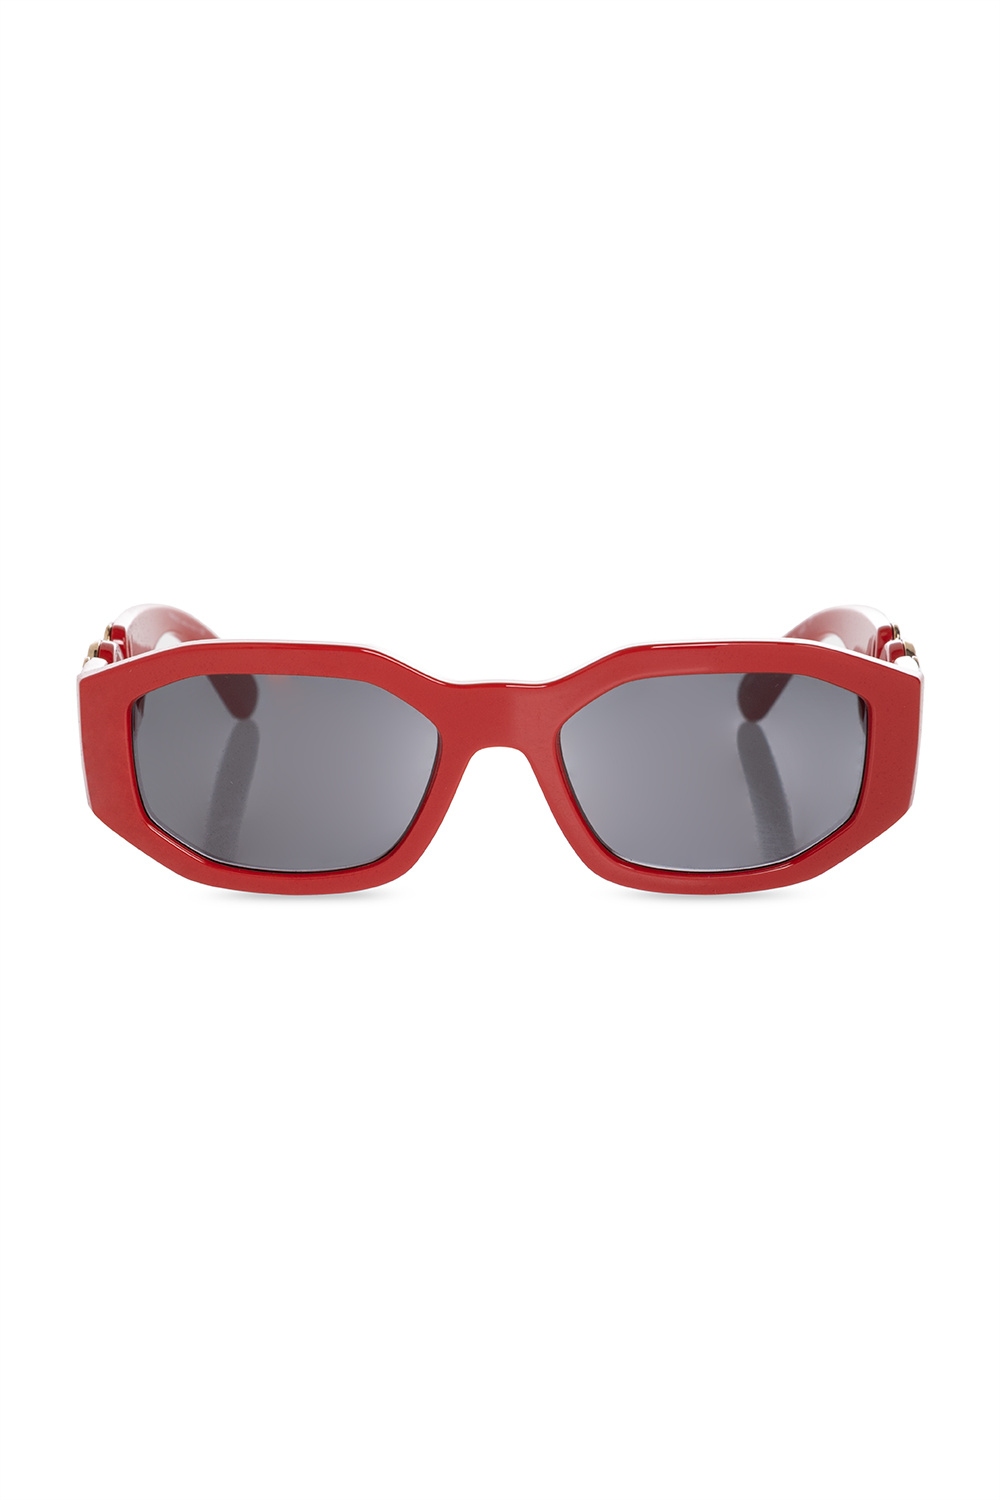 Versace Brown Oval Fashion Thalia sunglasses